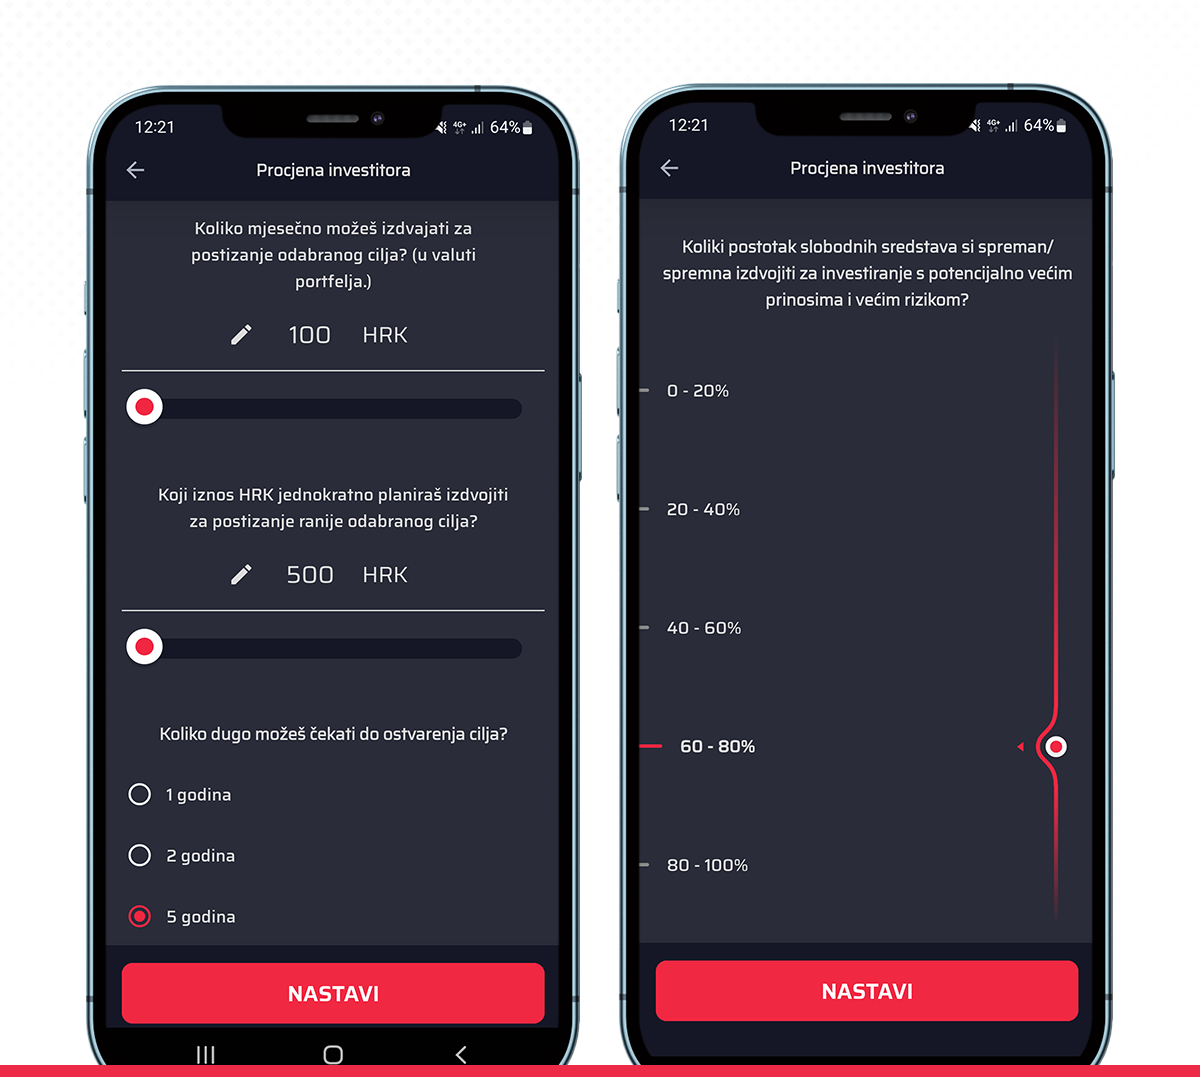 robo advisor - prikaz ekrana procjene investitora i upitnika u Genius by Intercapital aplikaciji